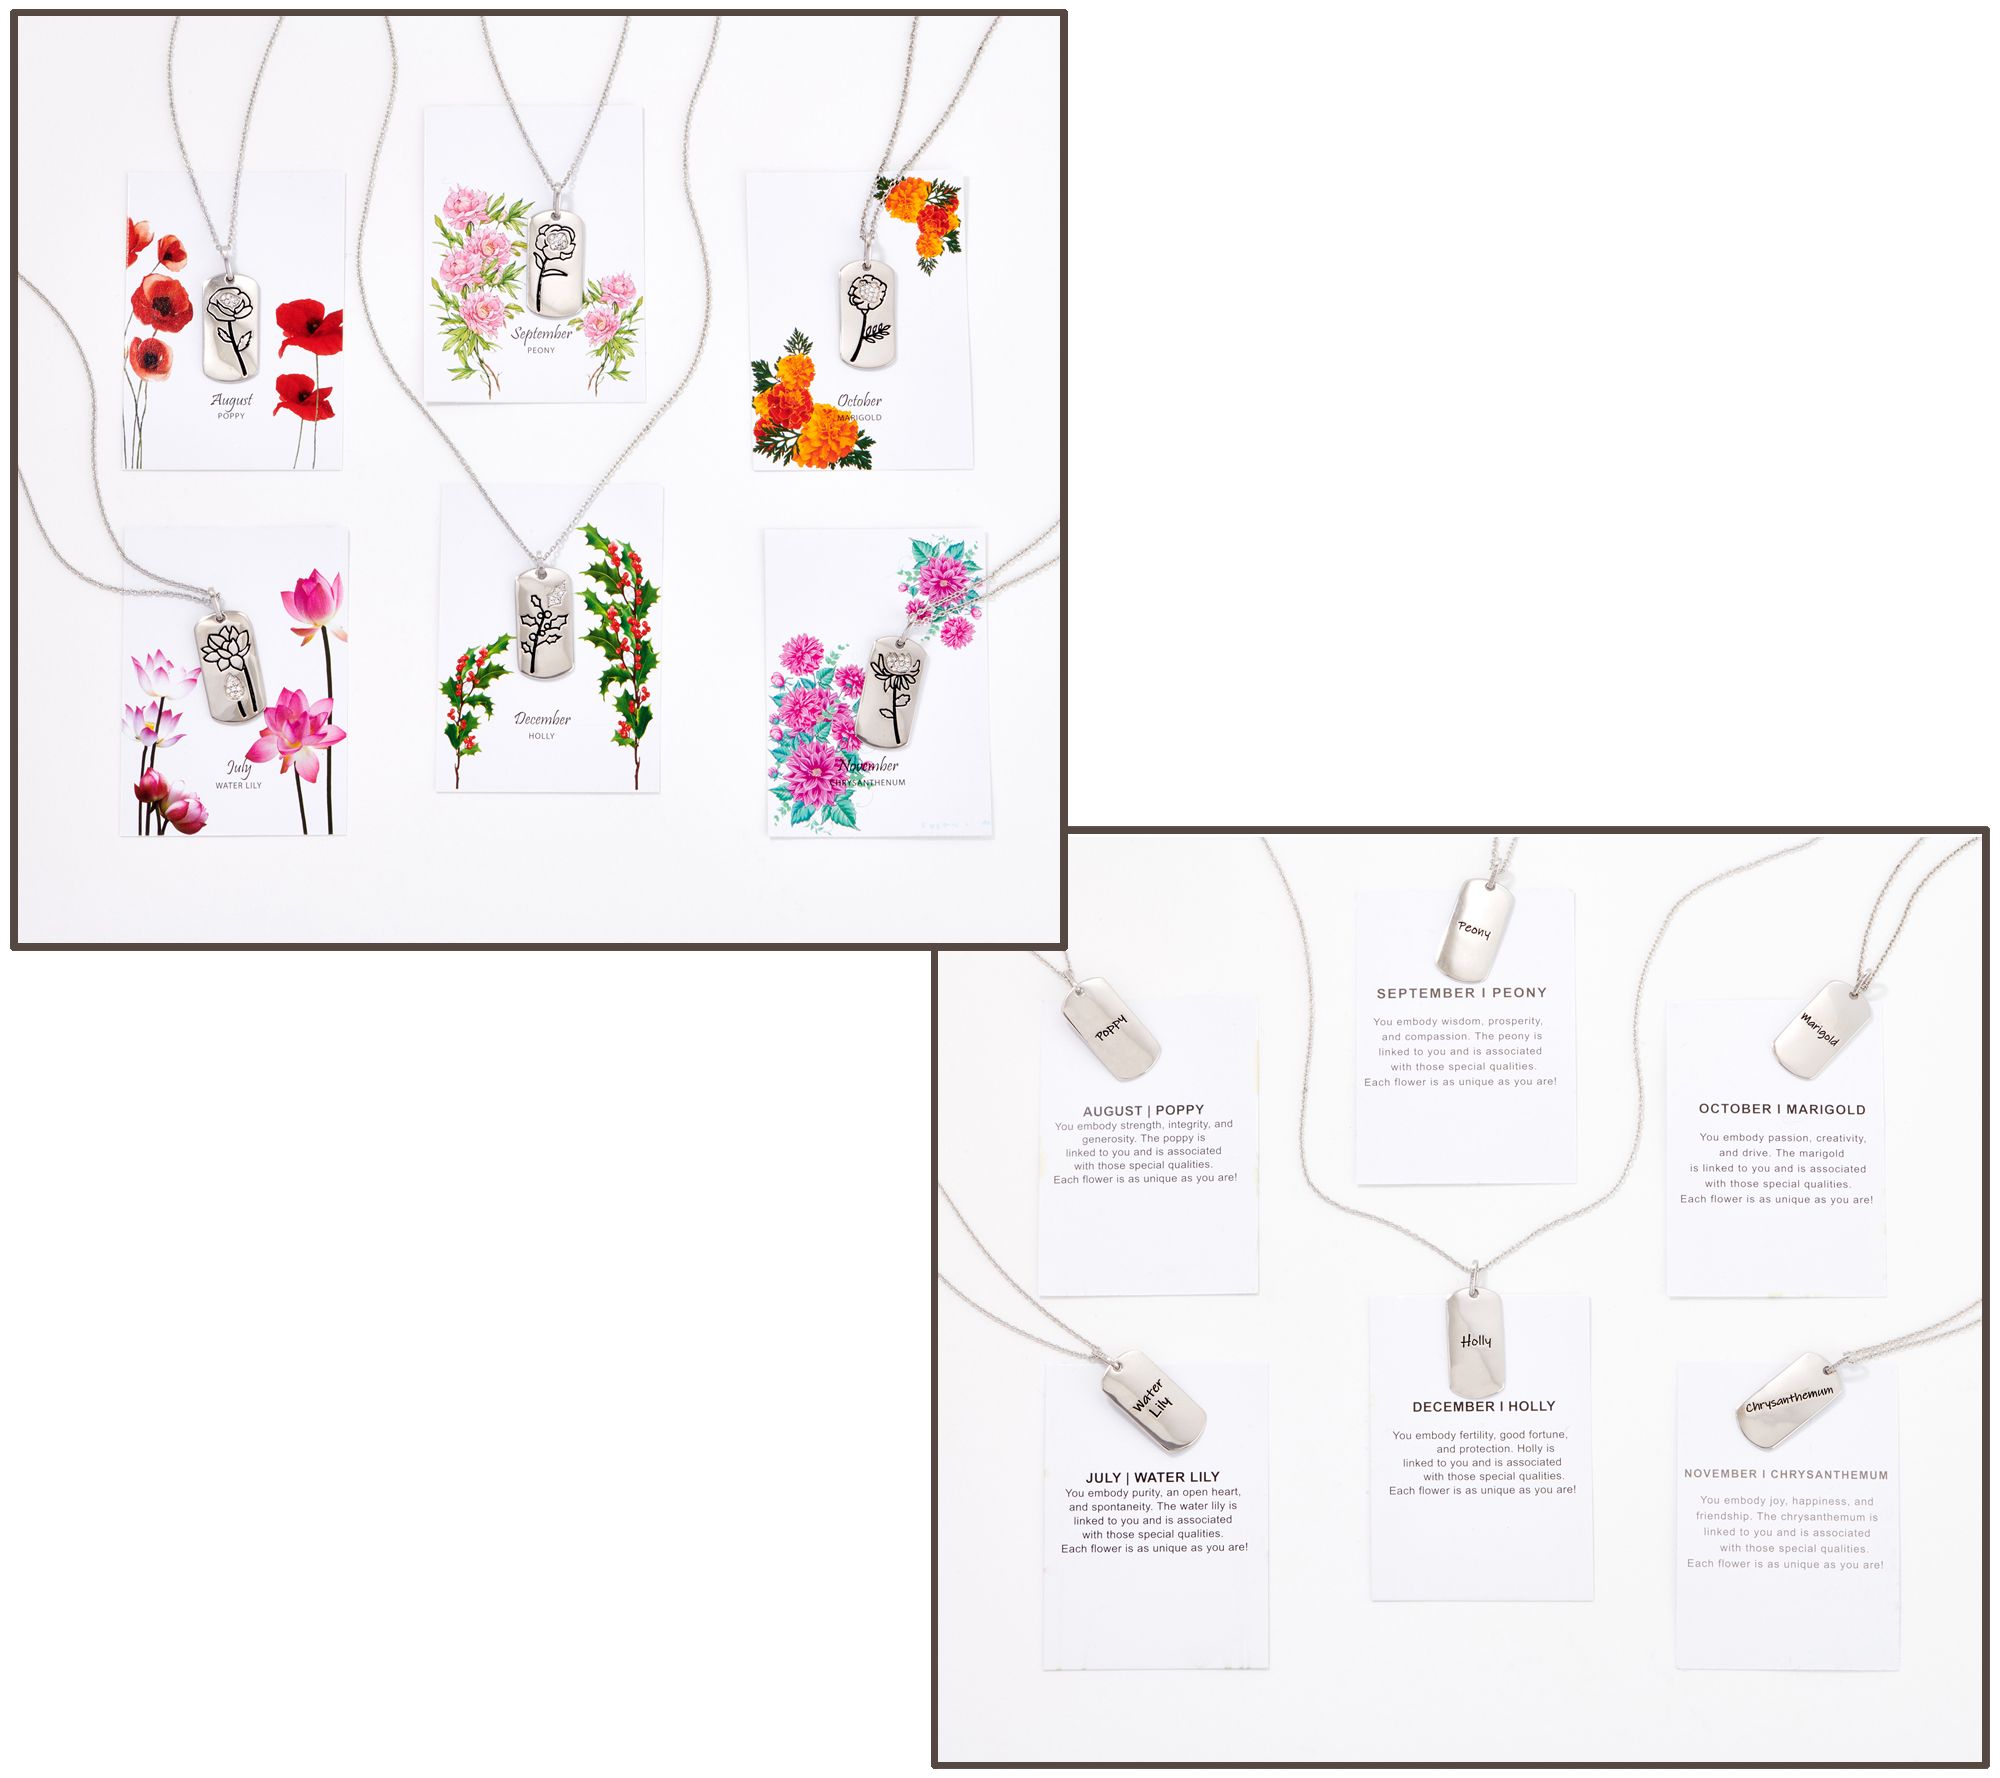 Diamonique Birth Flower Necklace Gift Sterling Silver Qvc Com